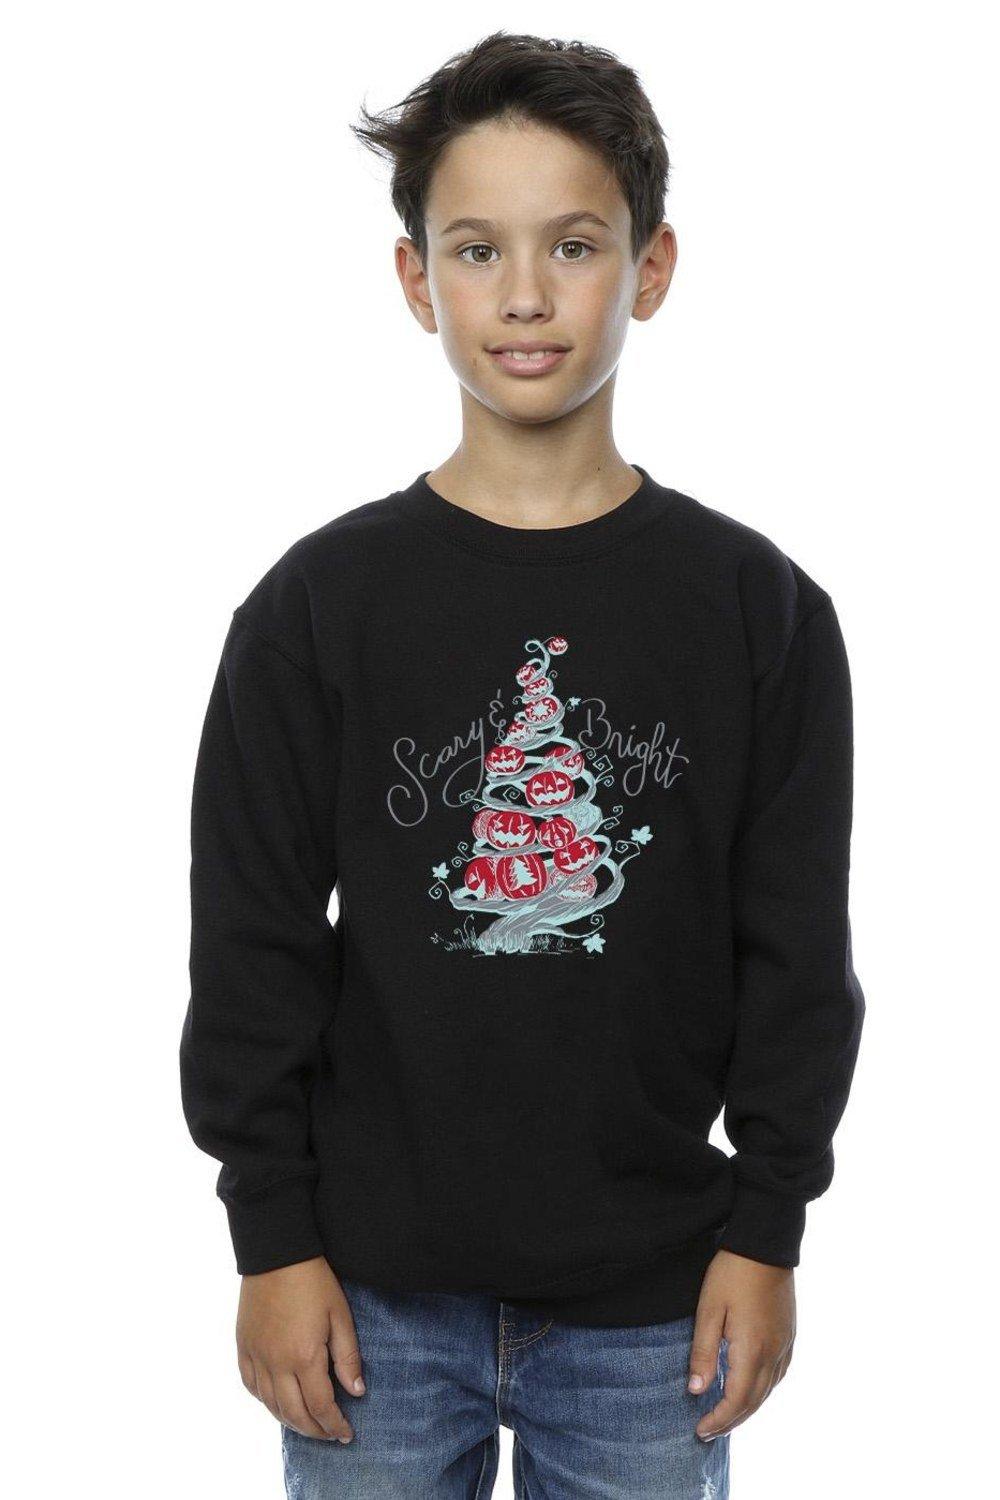 The Nightmare Before Christmas Scary & Bright Sweatshirt